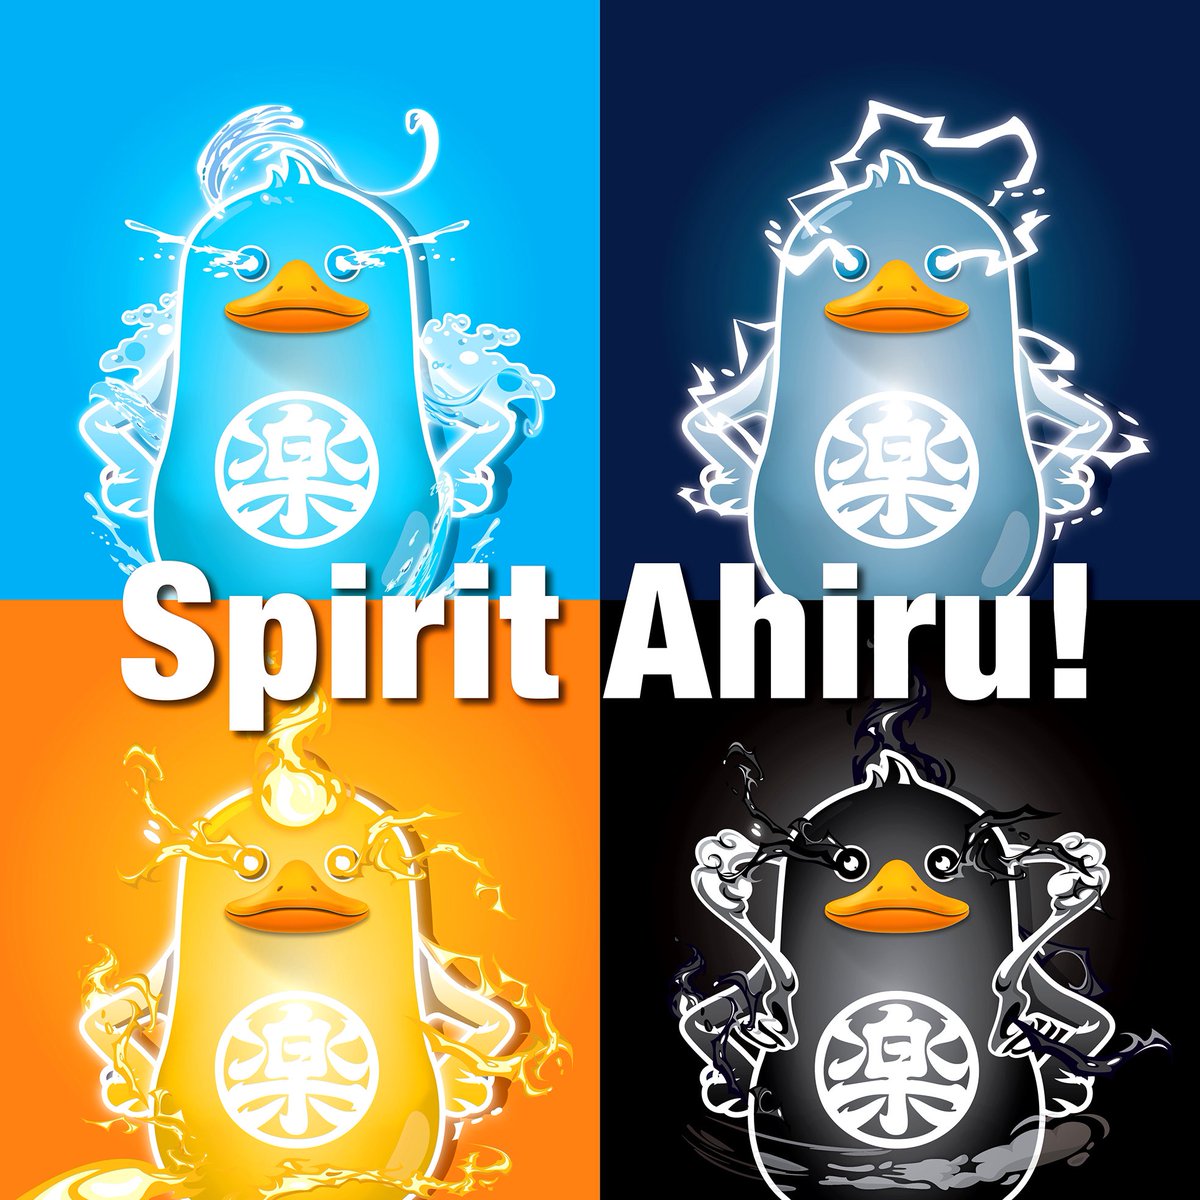 Spirit Ahiru!
opensea.io/collection/ahi…